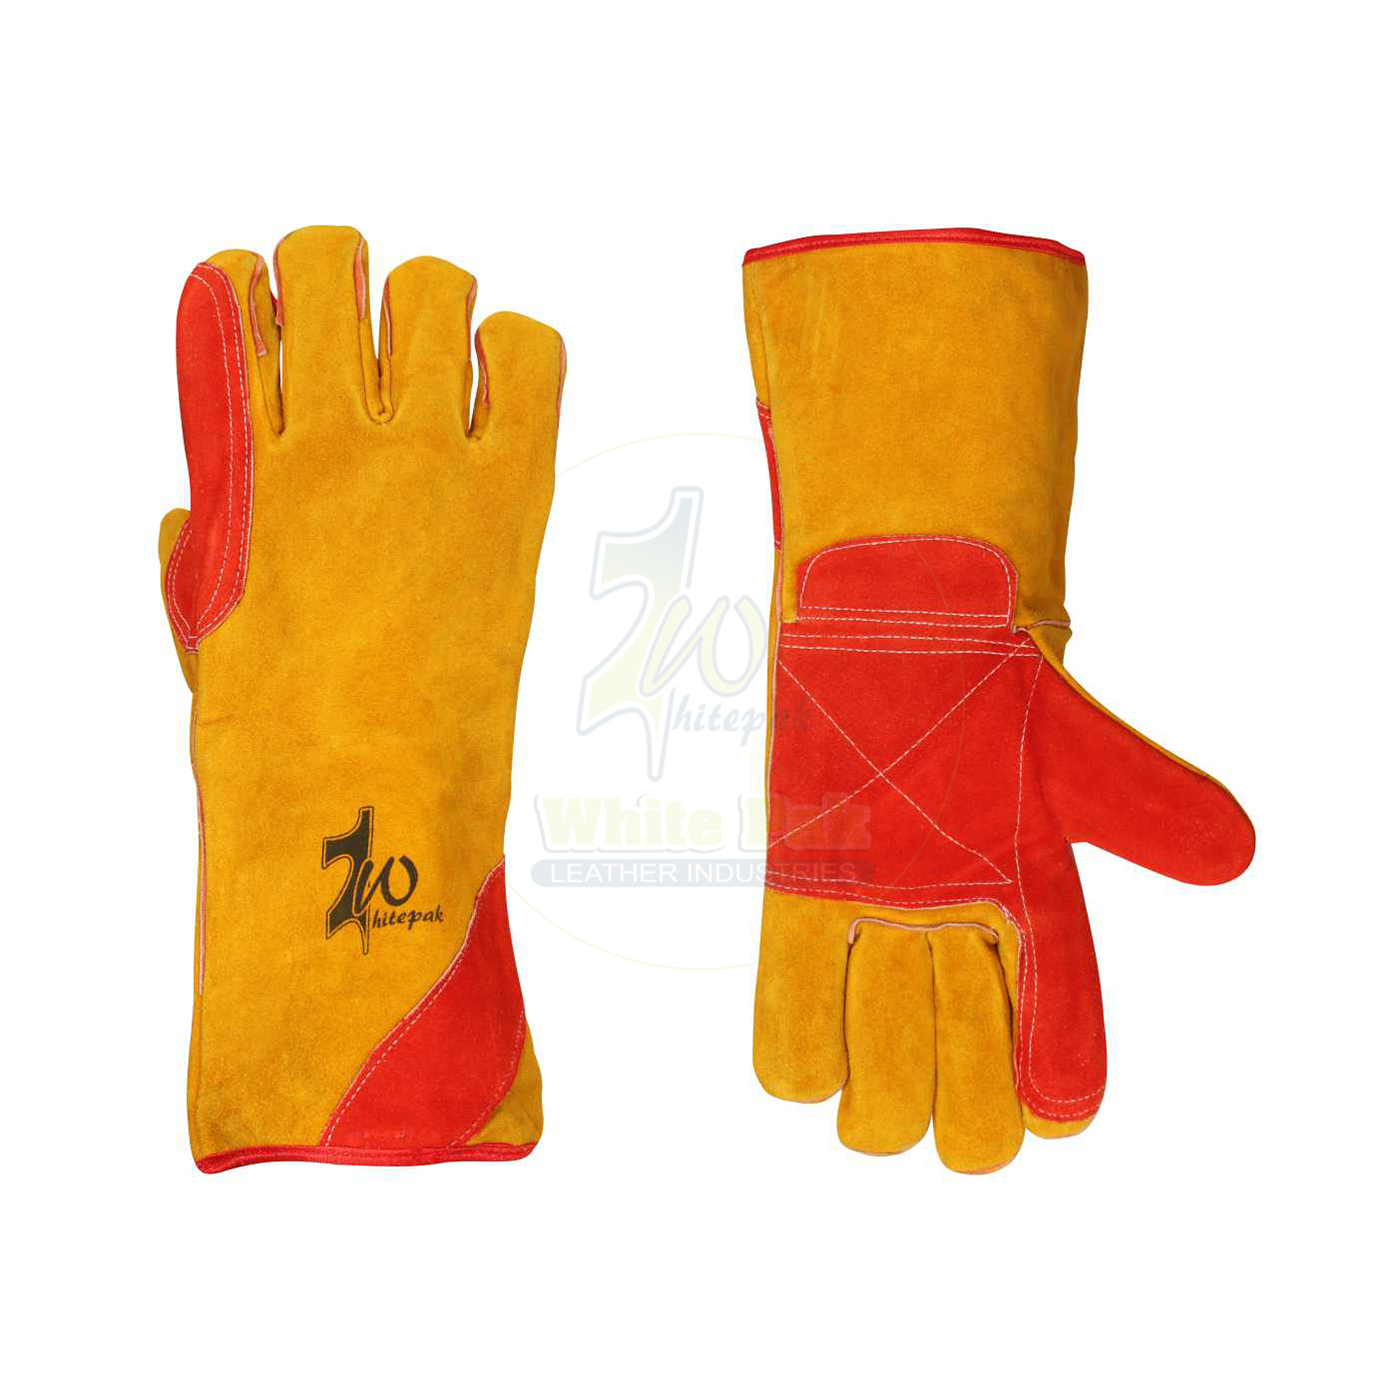 Fully Reinforcement Palm Welding Gloves